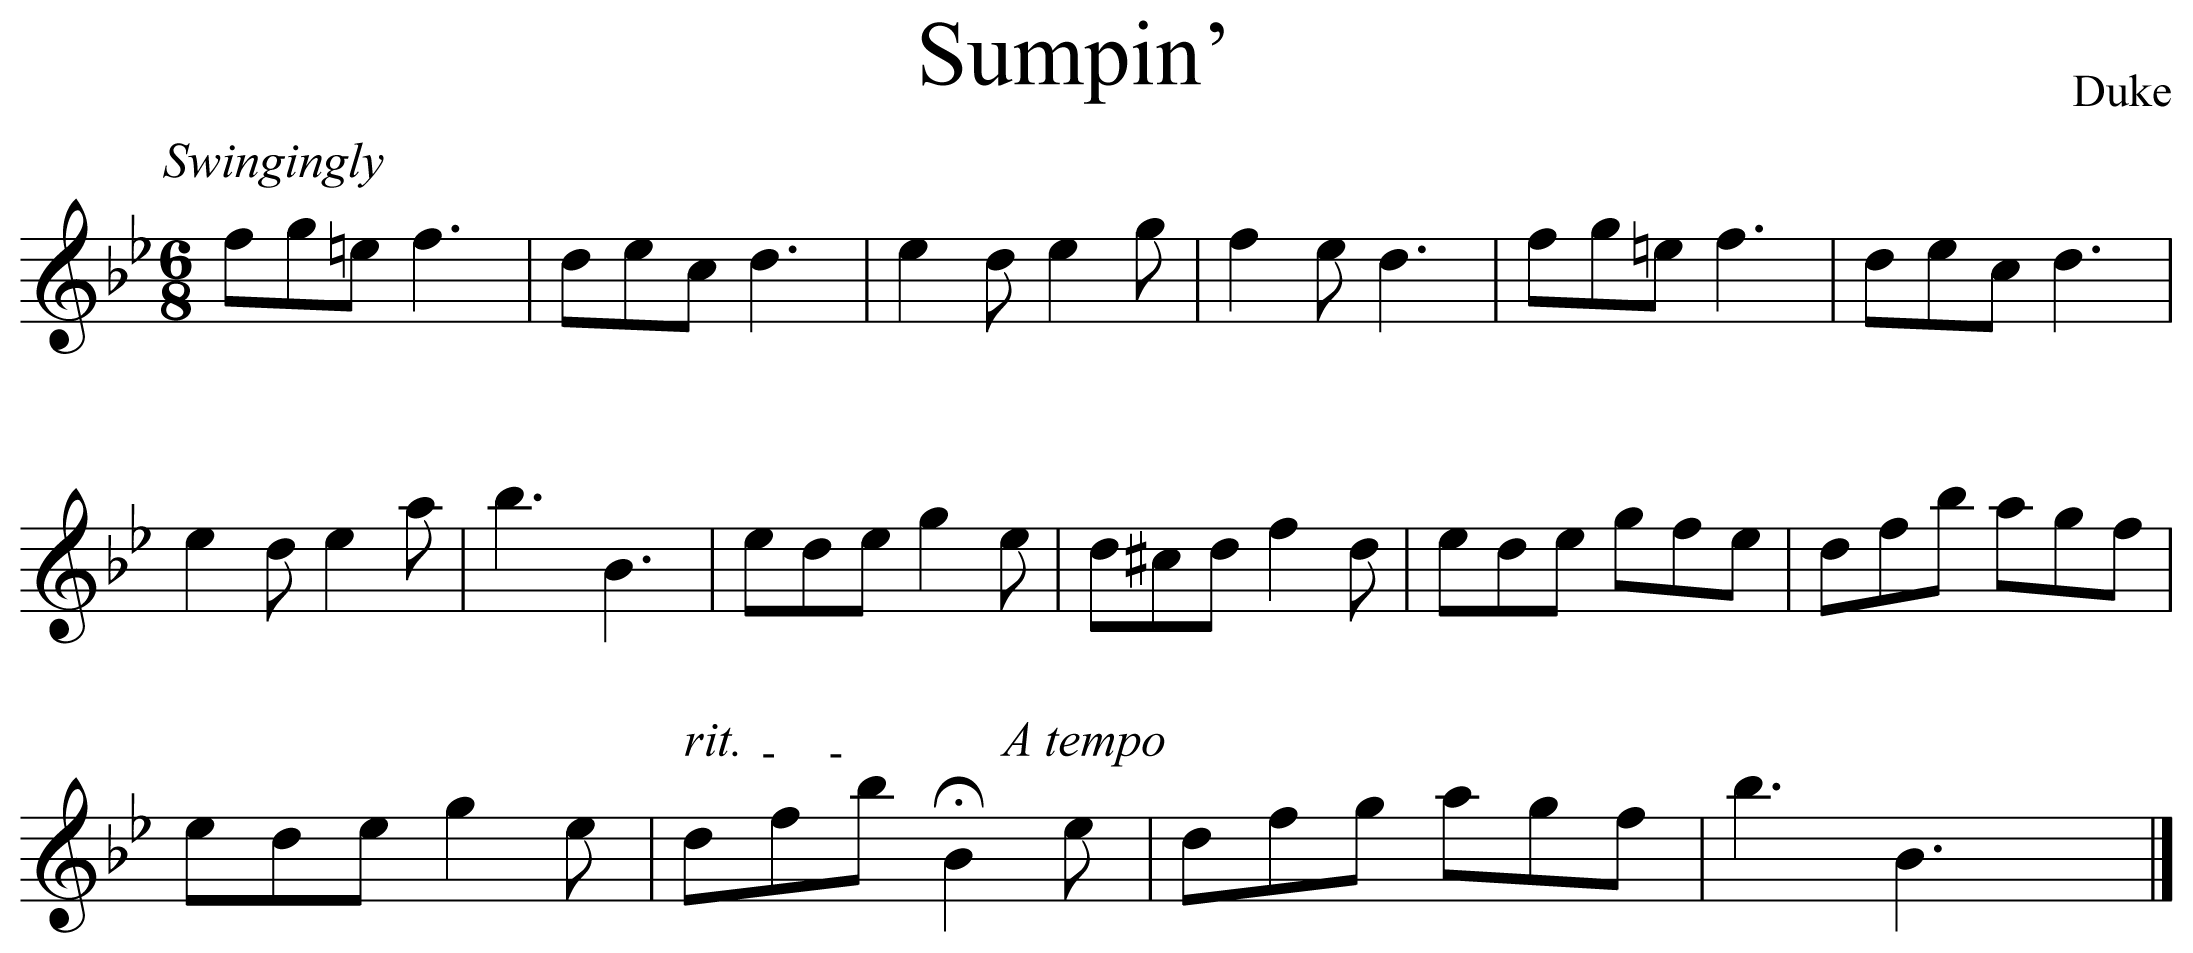 Sumpin' Notation Flute